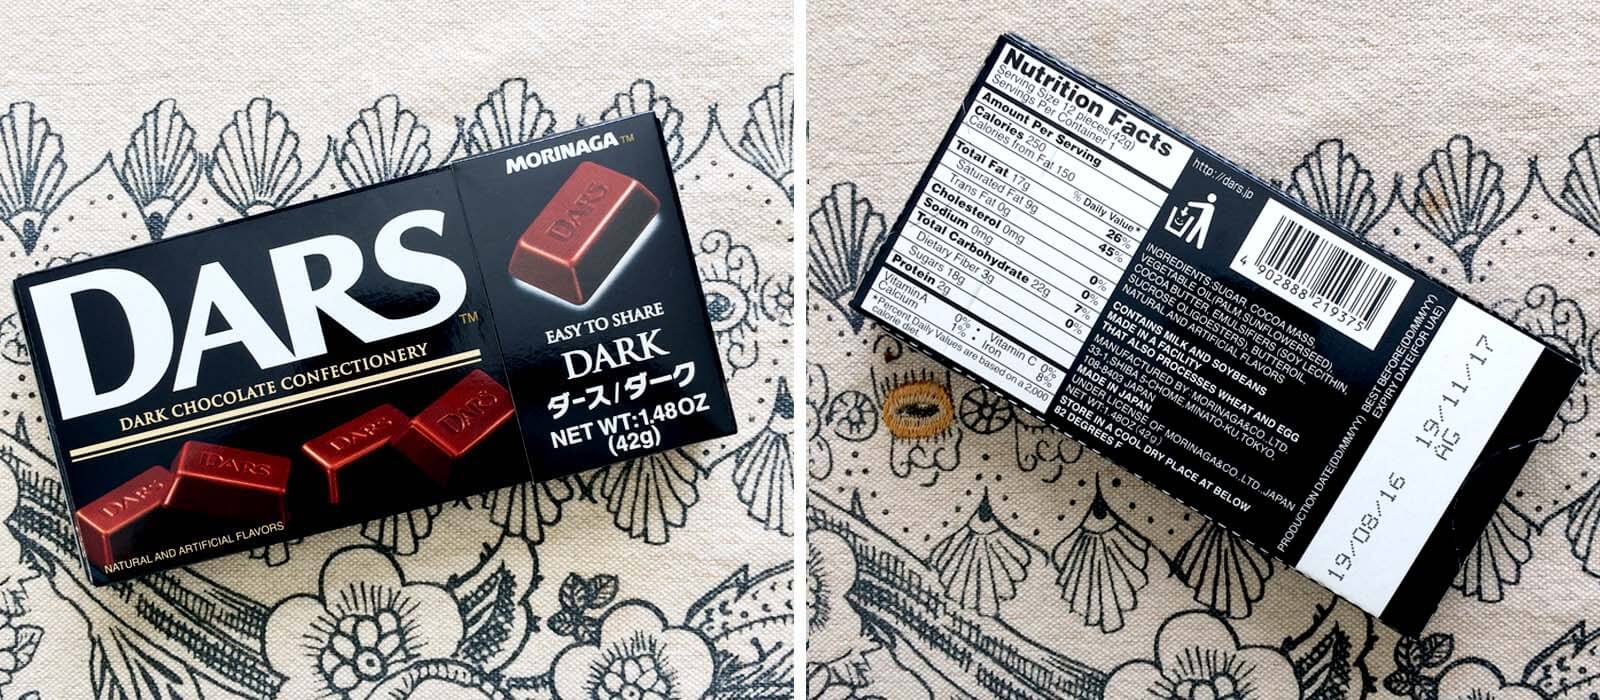 Morinaga's Dars Dark Chocolate